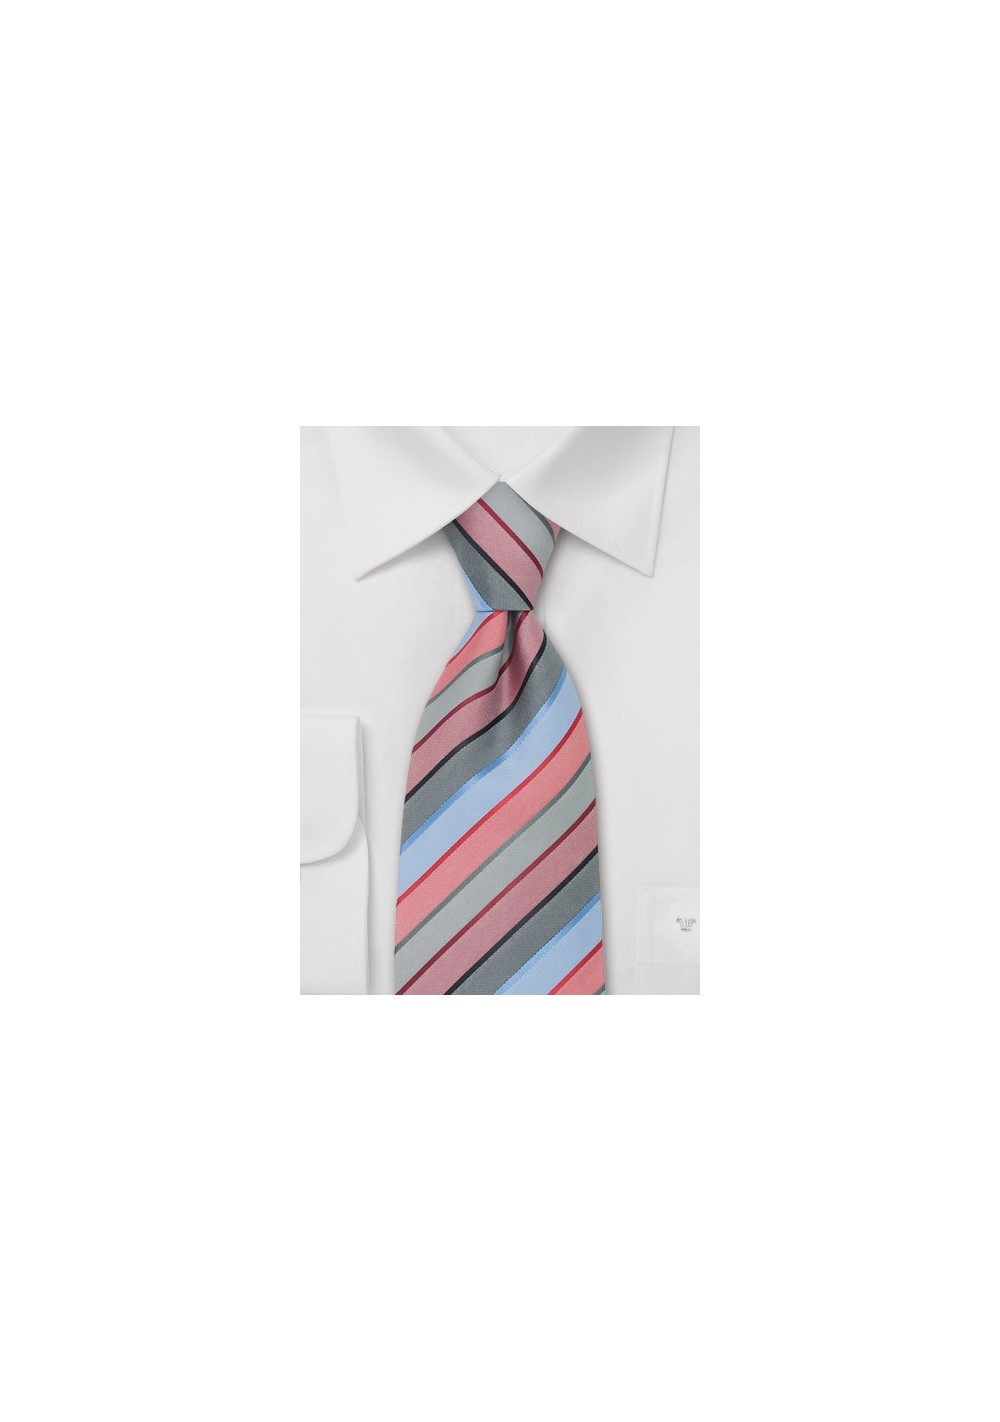 Striped Business Tie